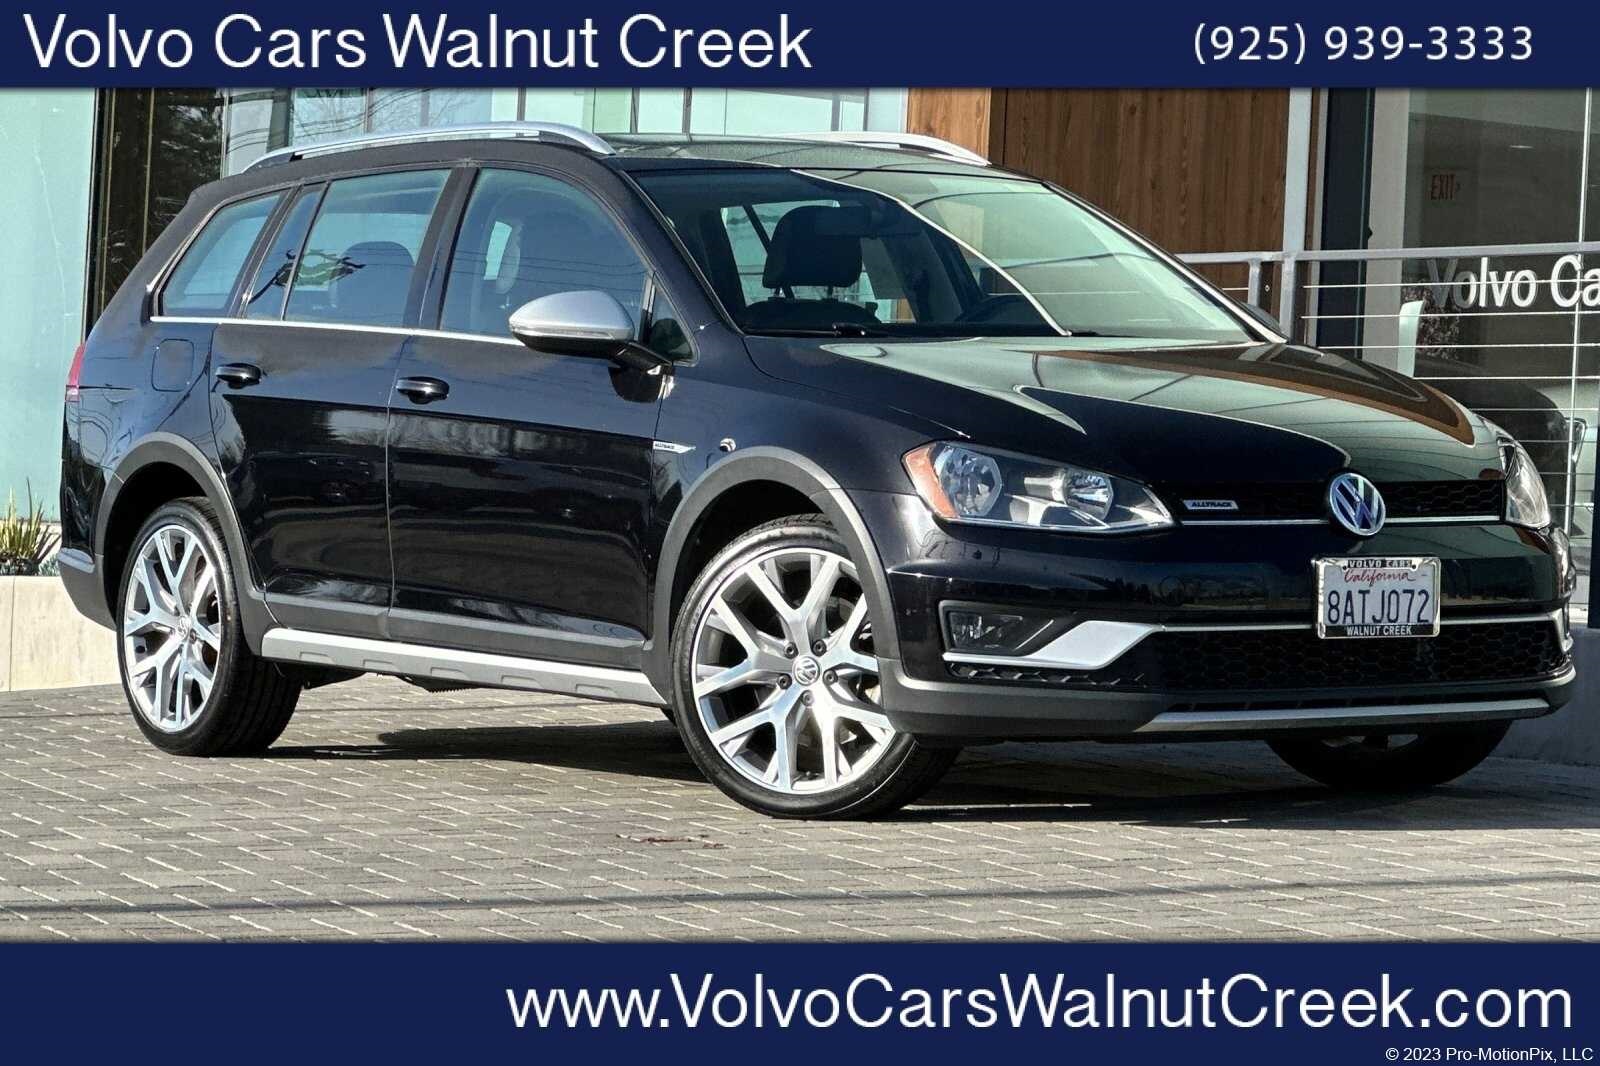 2017 Volkswagen Golf Walnut Creek CA